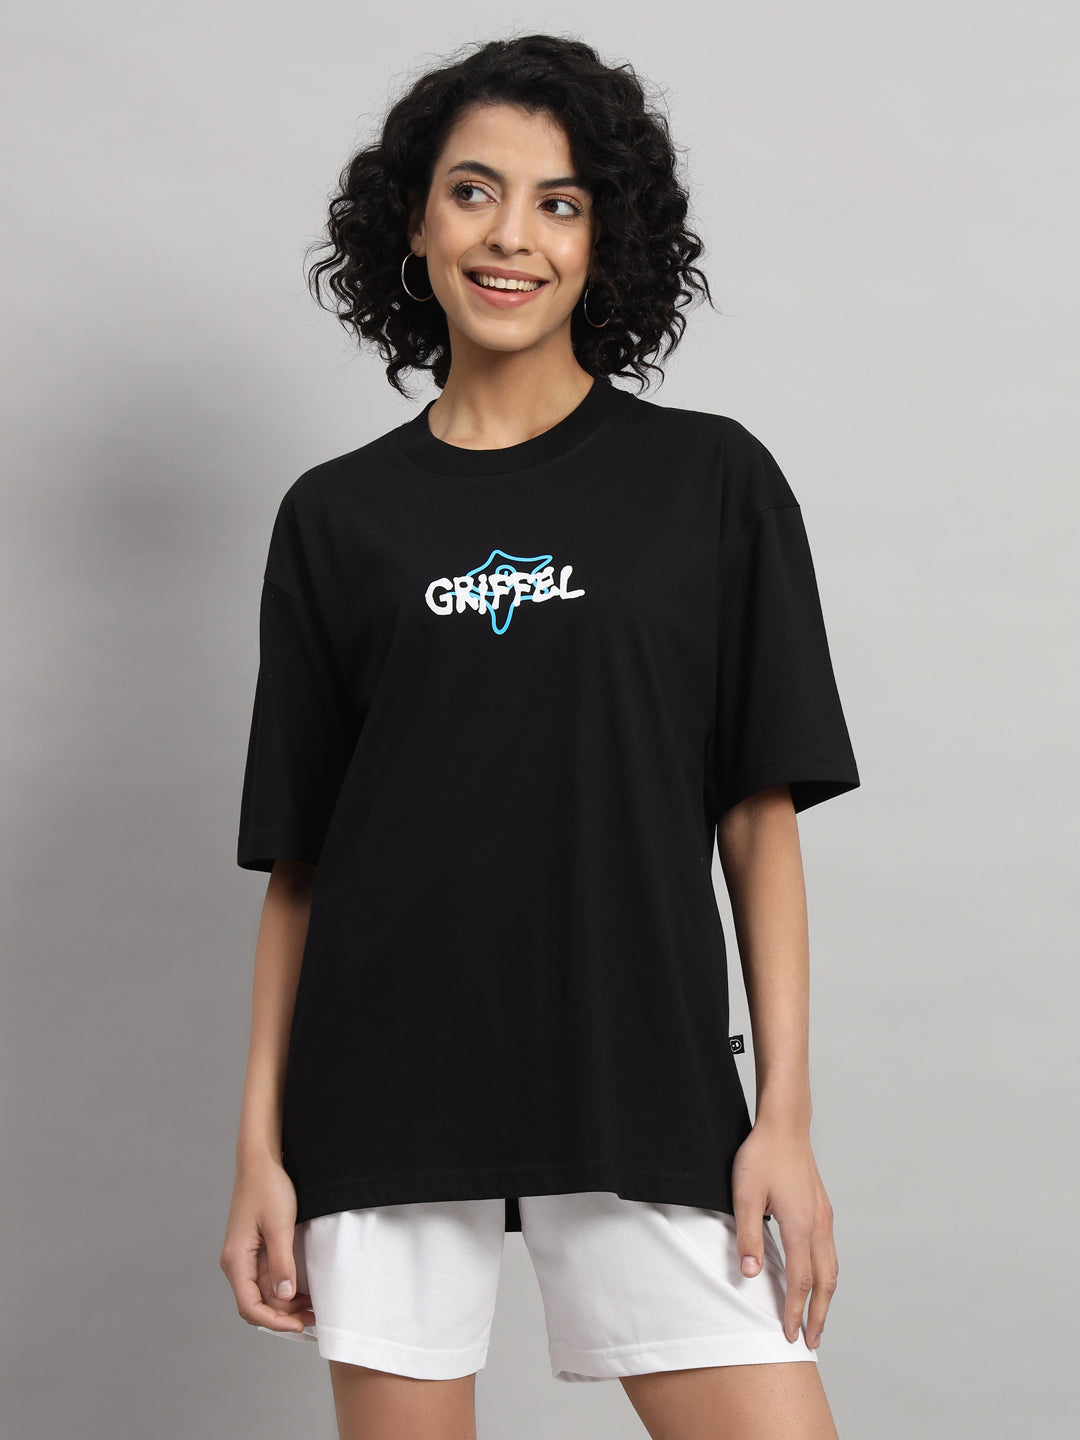 Ocean T-shirt and Short Set - griffel